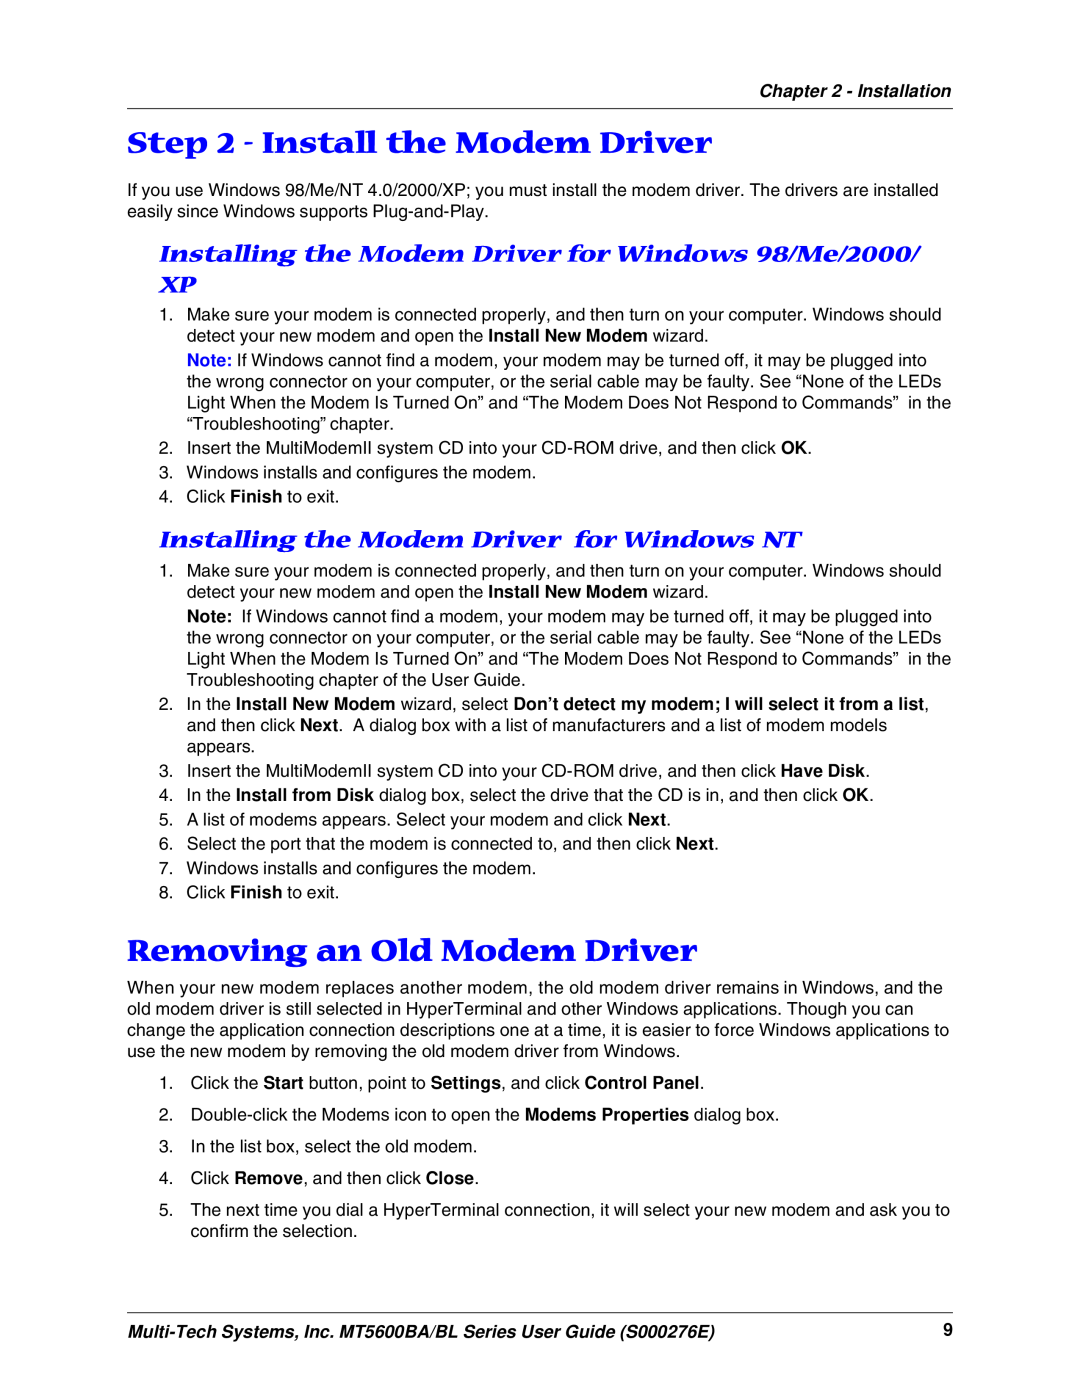 Multitech MT5600BA Install the Modem Driver, Removing an Old Modem Driver, Installing the Modem Driver for Windows NT 